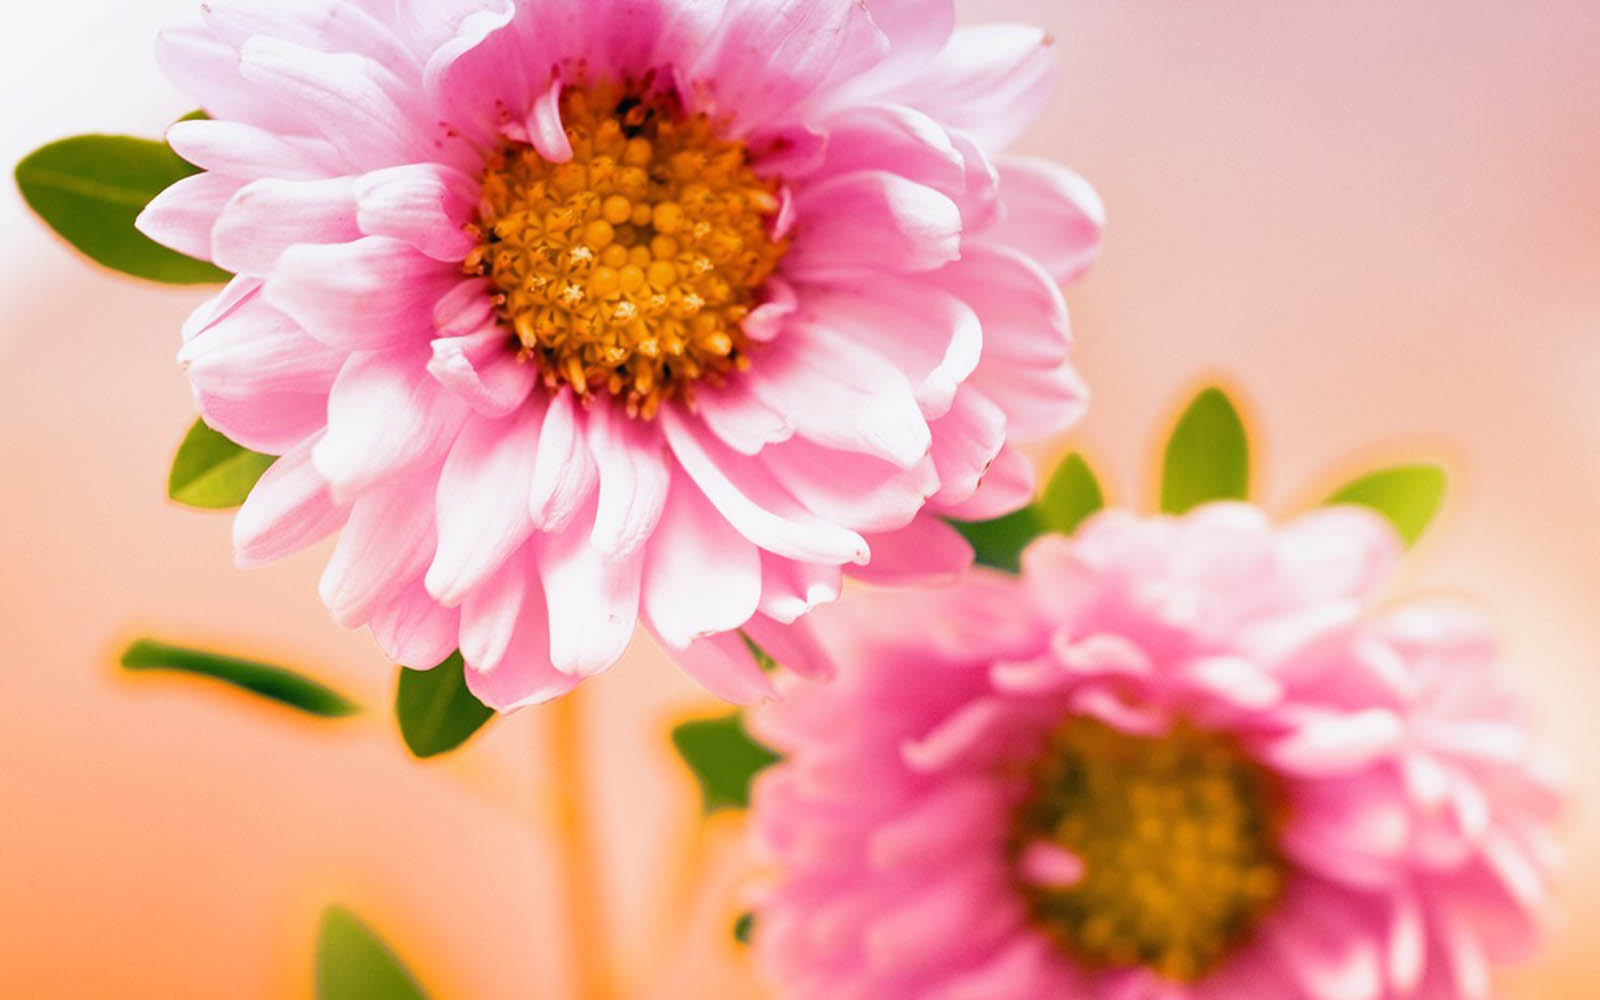  Gambar  Gambar  Bunga  Berwarna Merah Muda